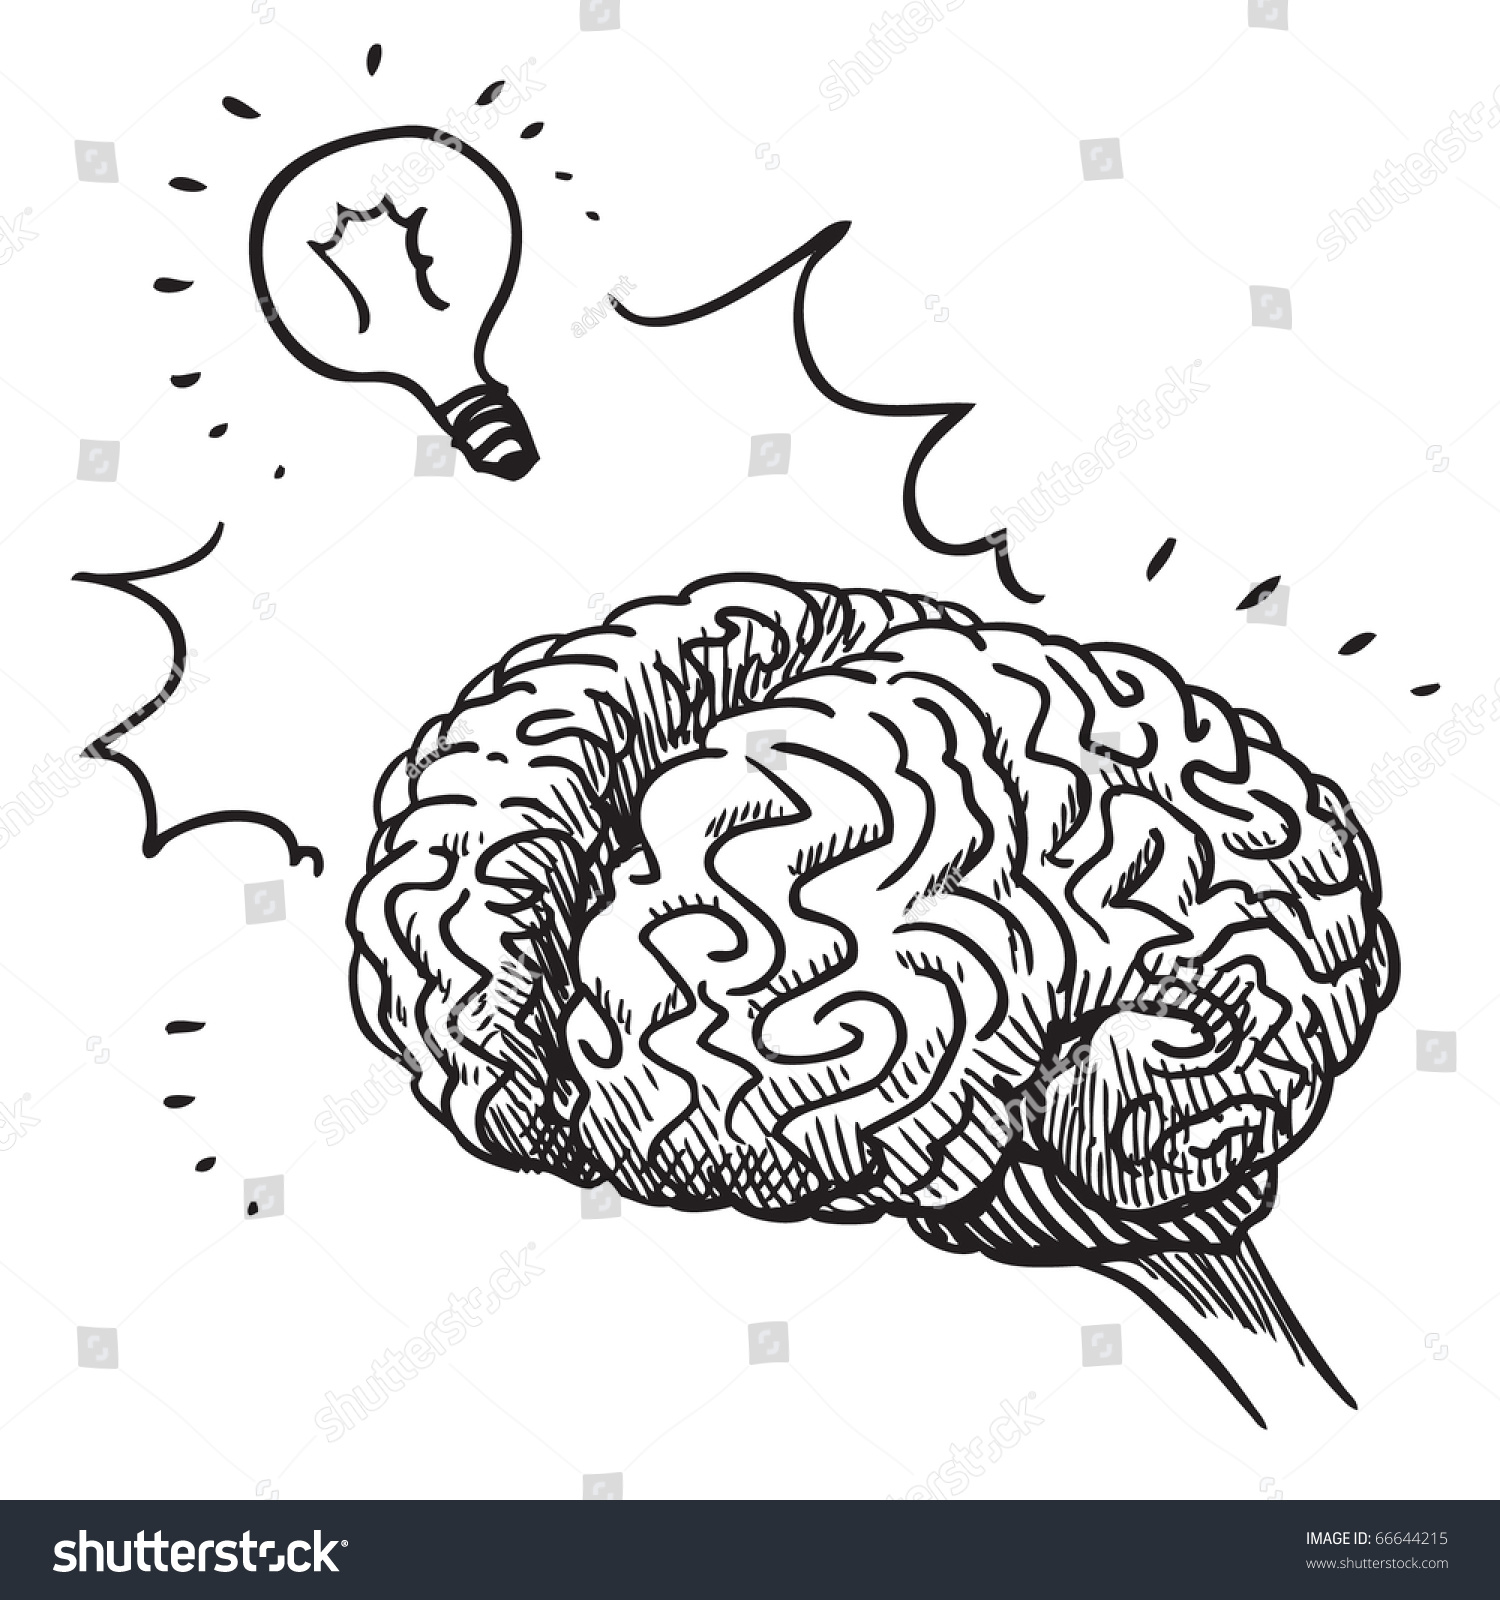 Sketch Style Illustration Of A Human Brain Having An Idea - 66644215 ...